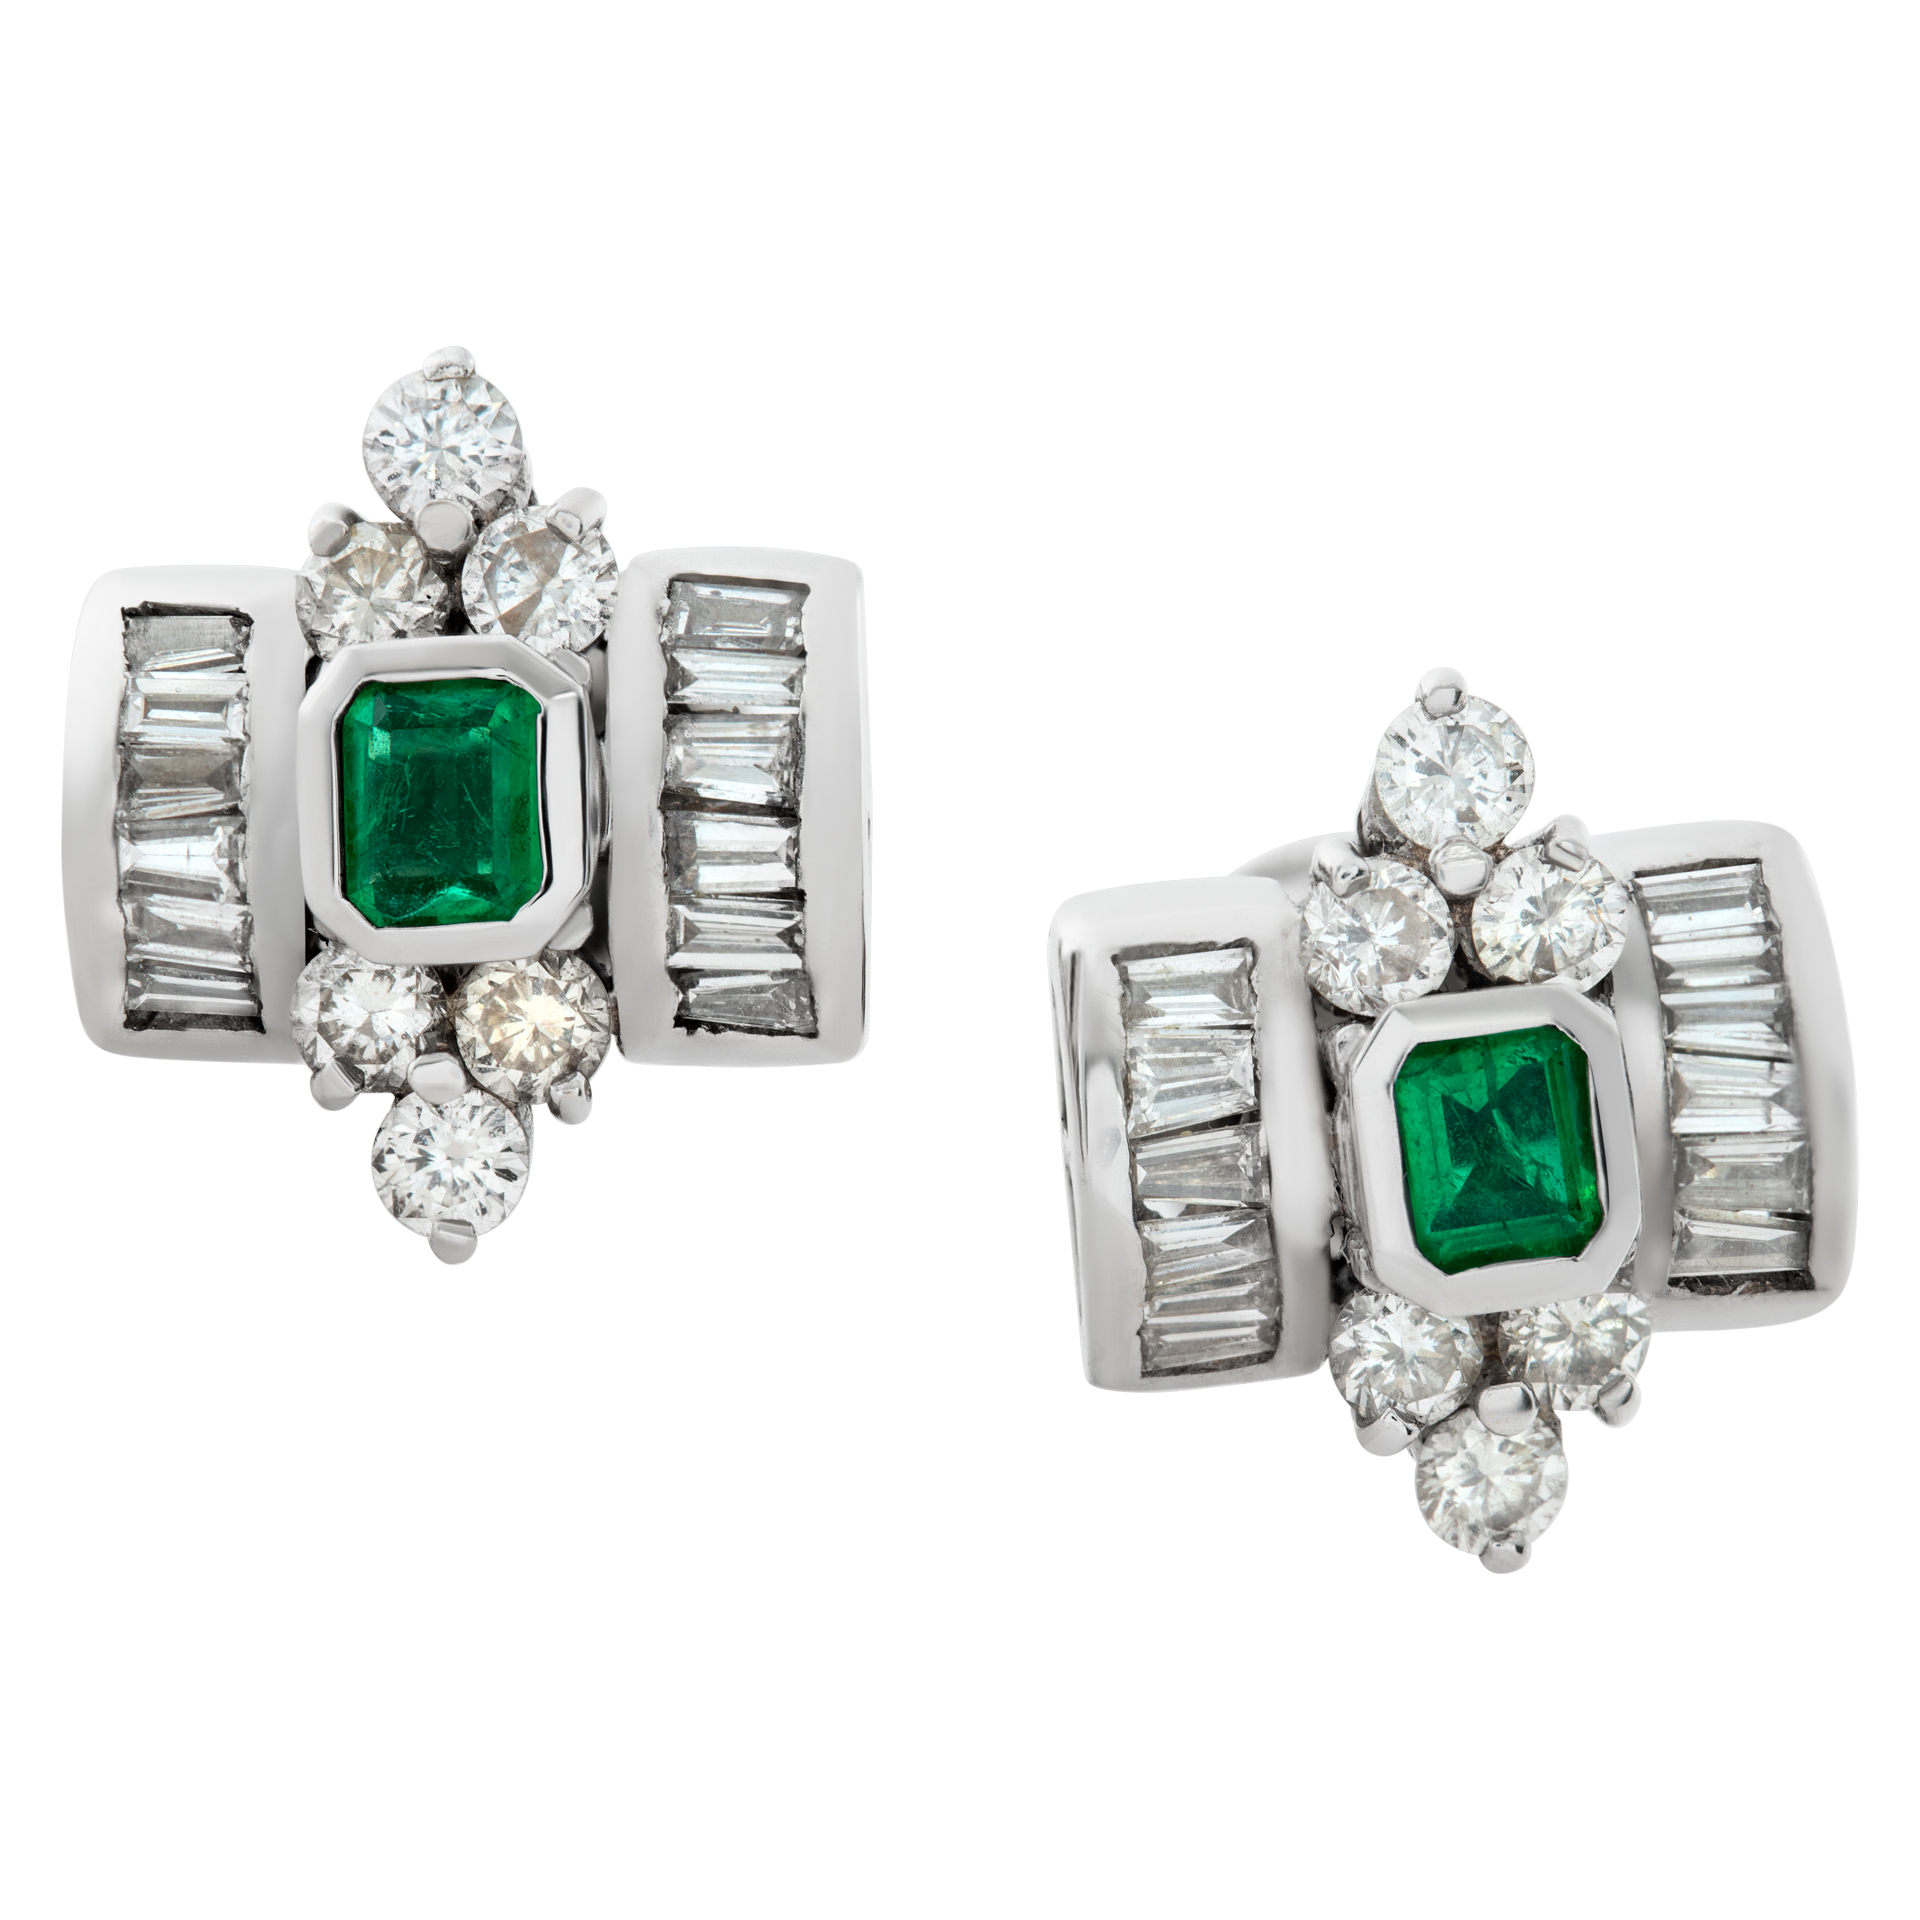 Diamond & emerald earrings in 14k white gold with screw earring backs image 1